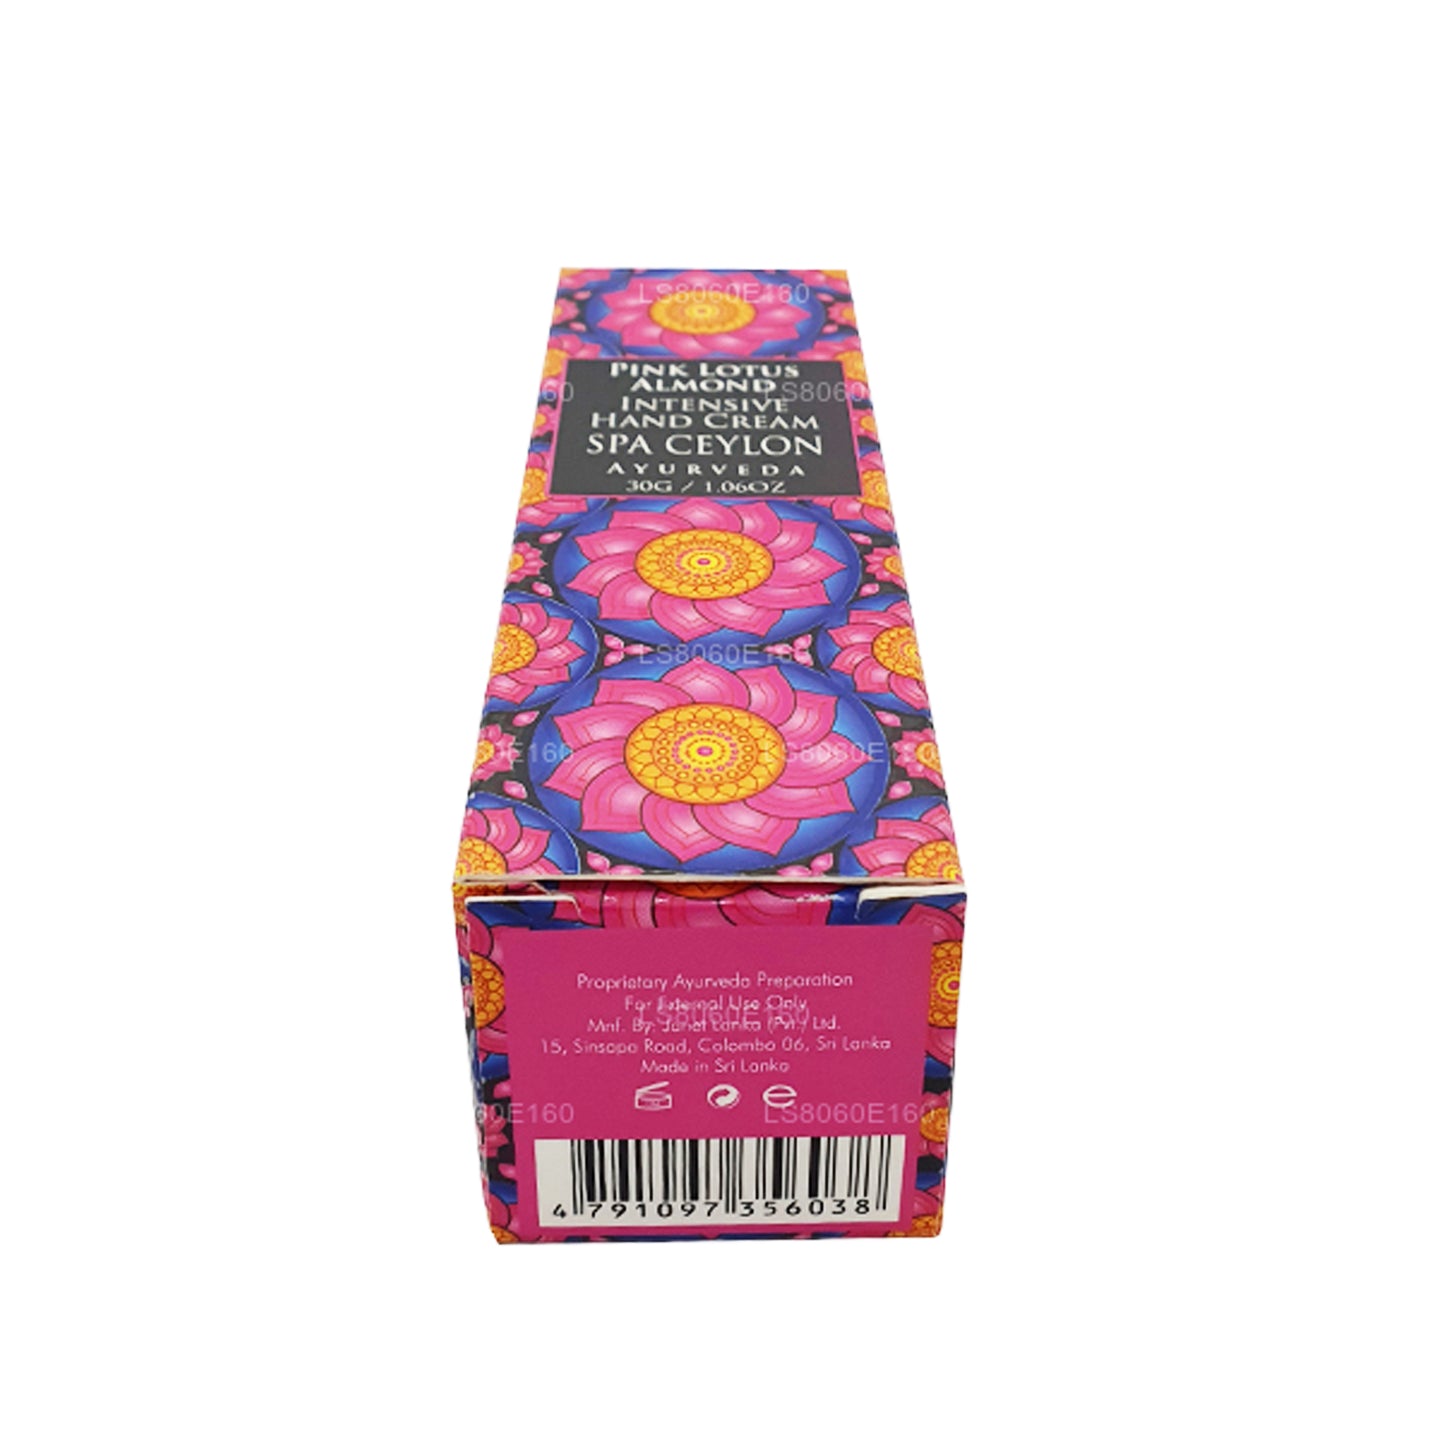 Spa Ceylon Pink Lotus Almond Intensieve Handcrème (30 g)